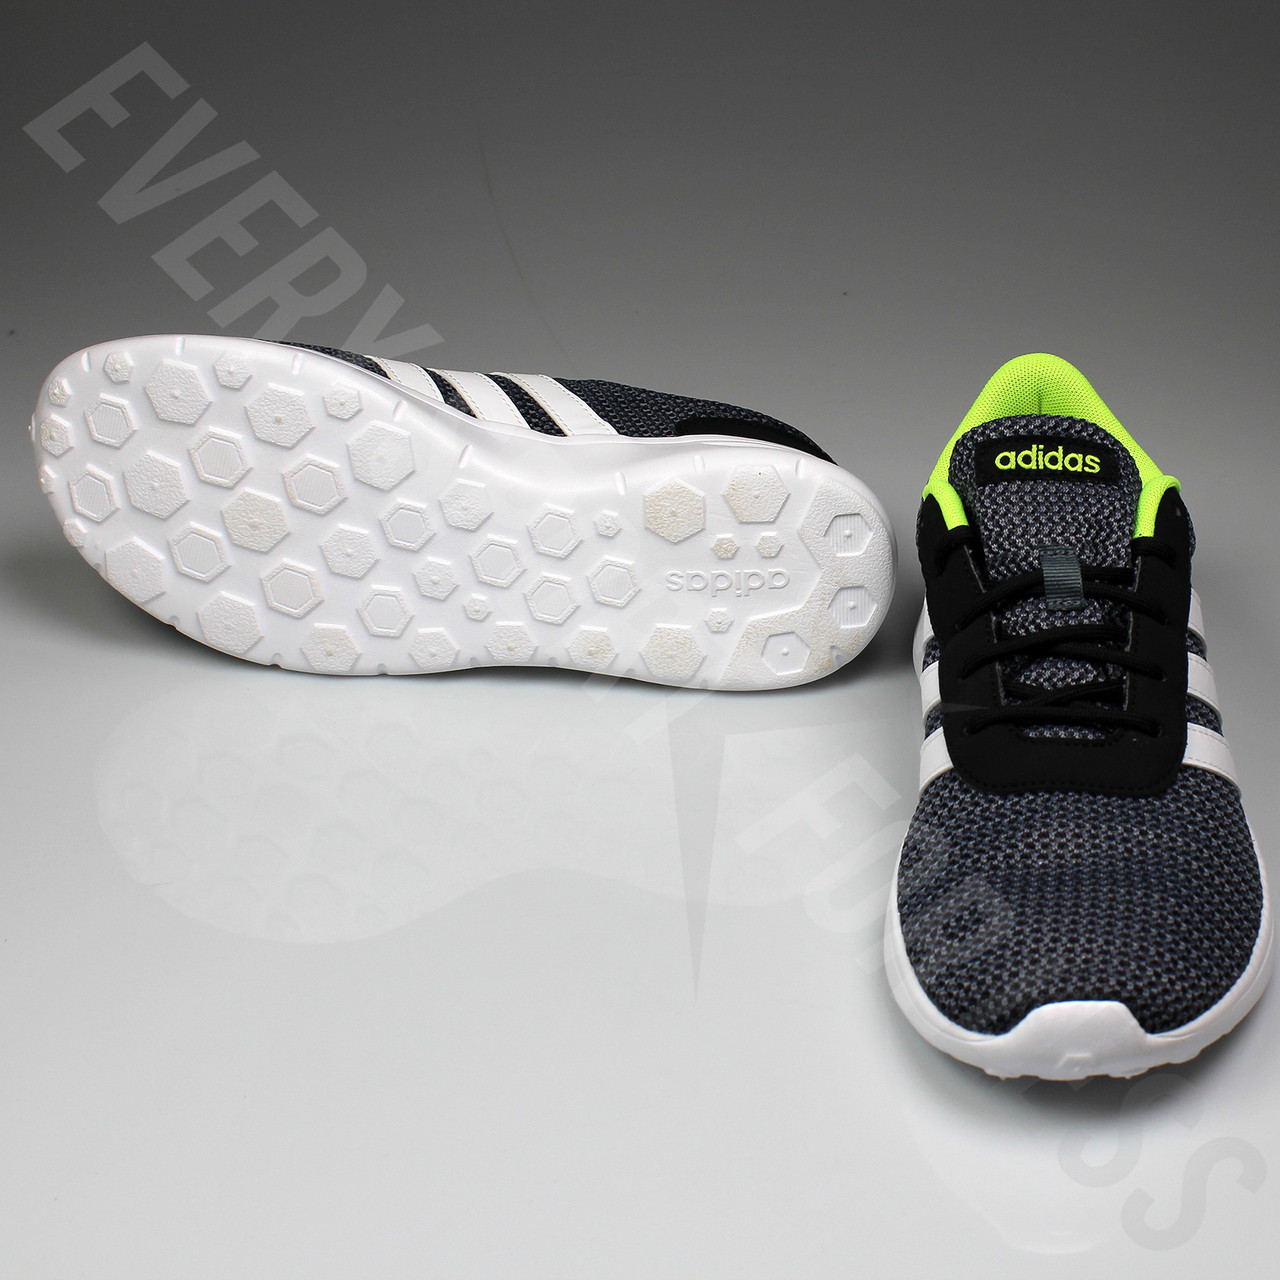 verfrommeld Concreet jeugd Adidas Neo Lit Racer - Mens - F99417 - Black/White Size 8